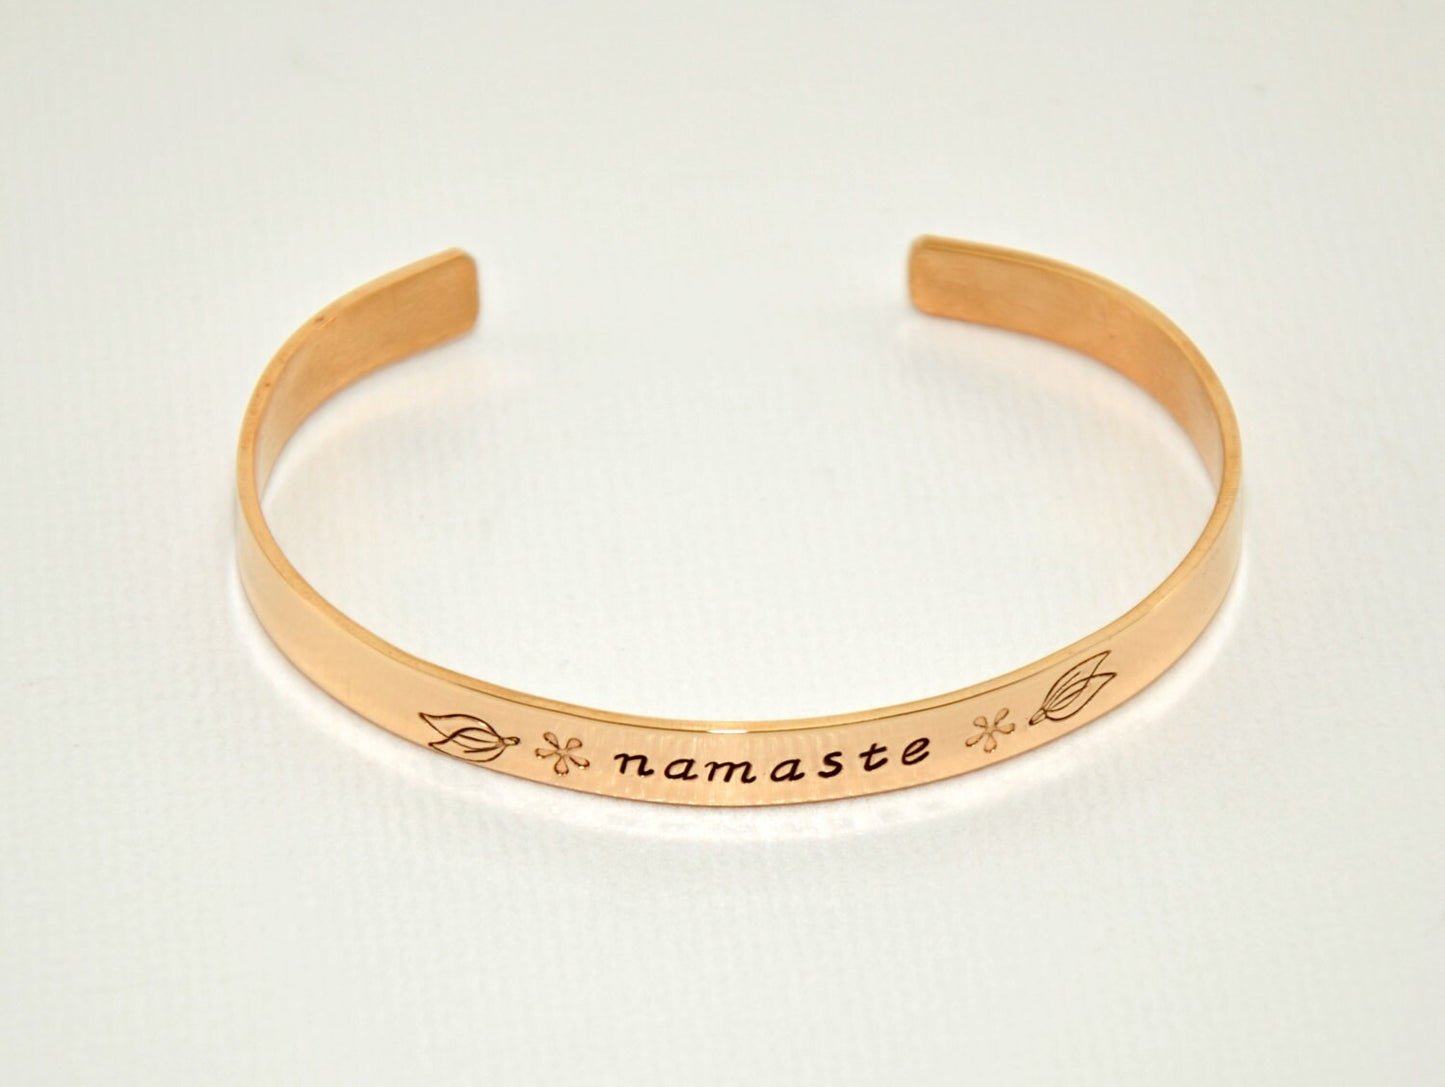 Namaste bronze cuff bracelet